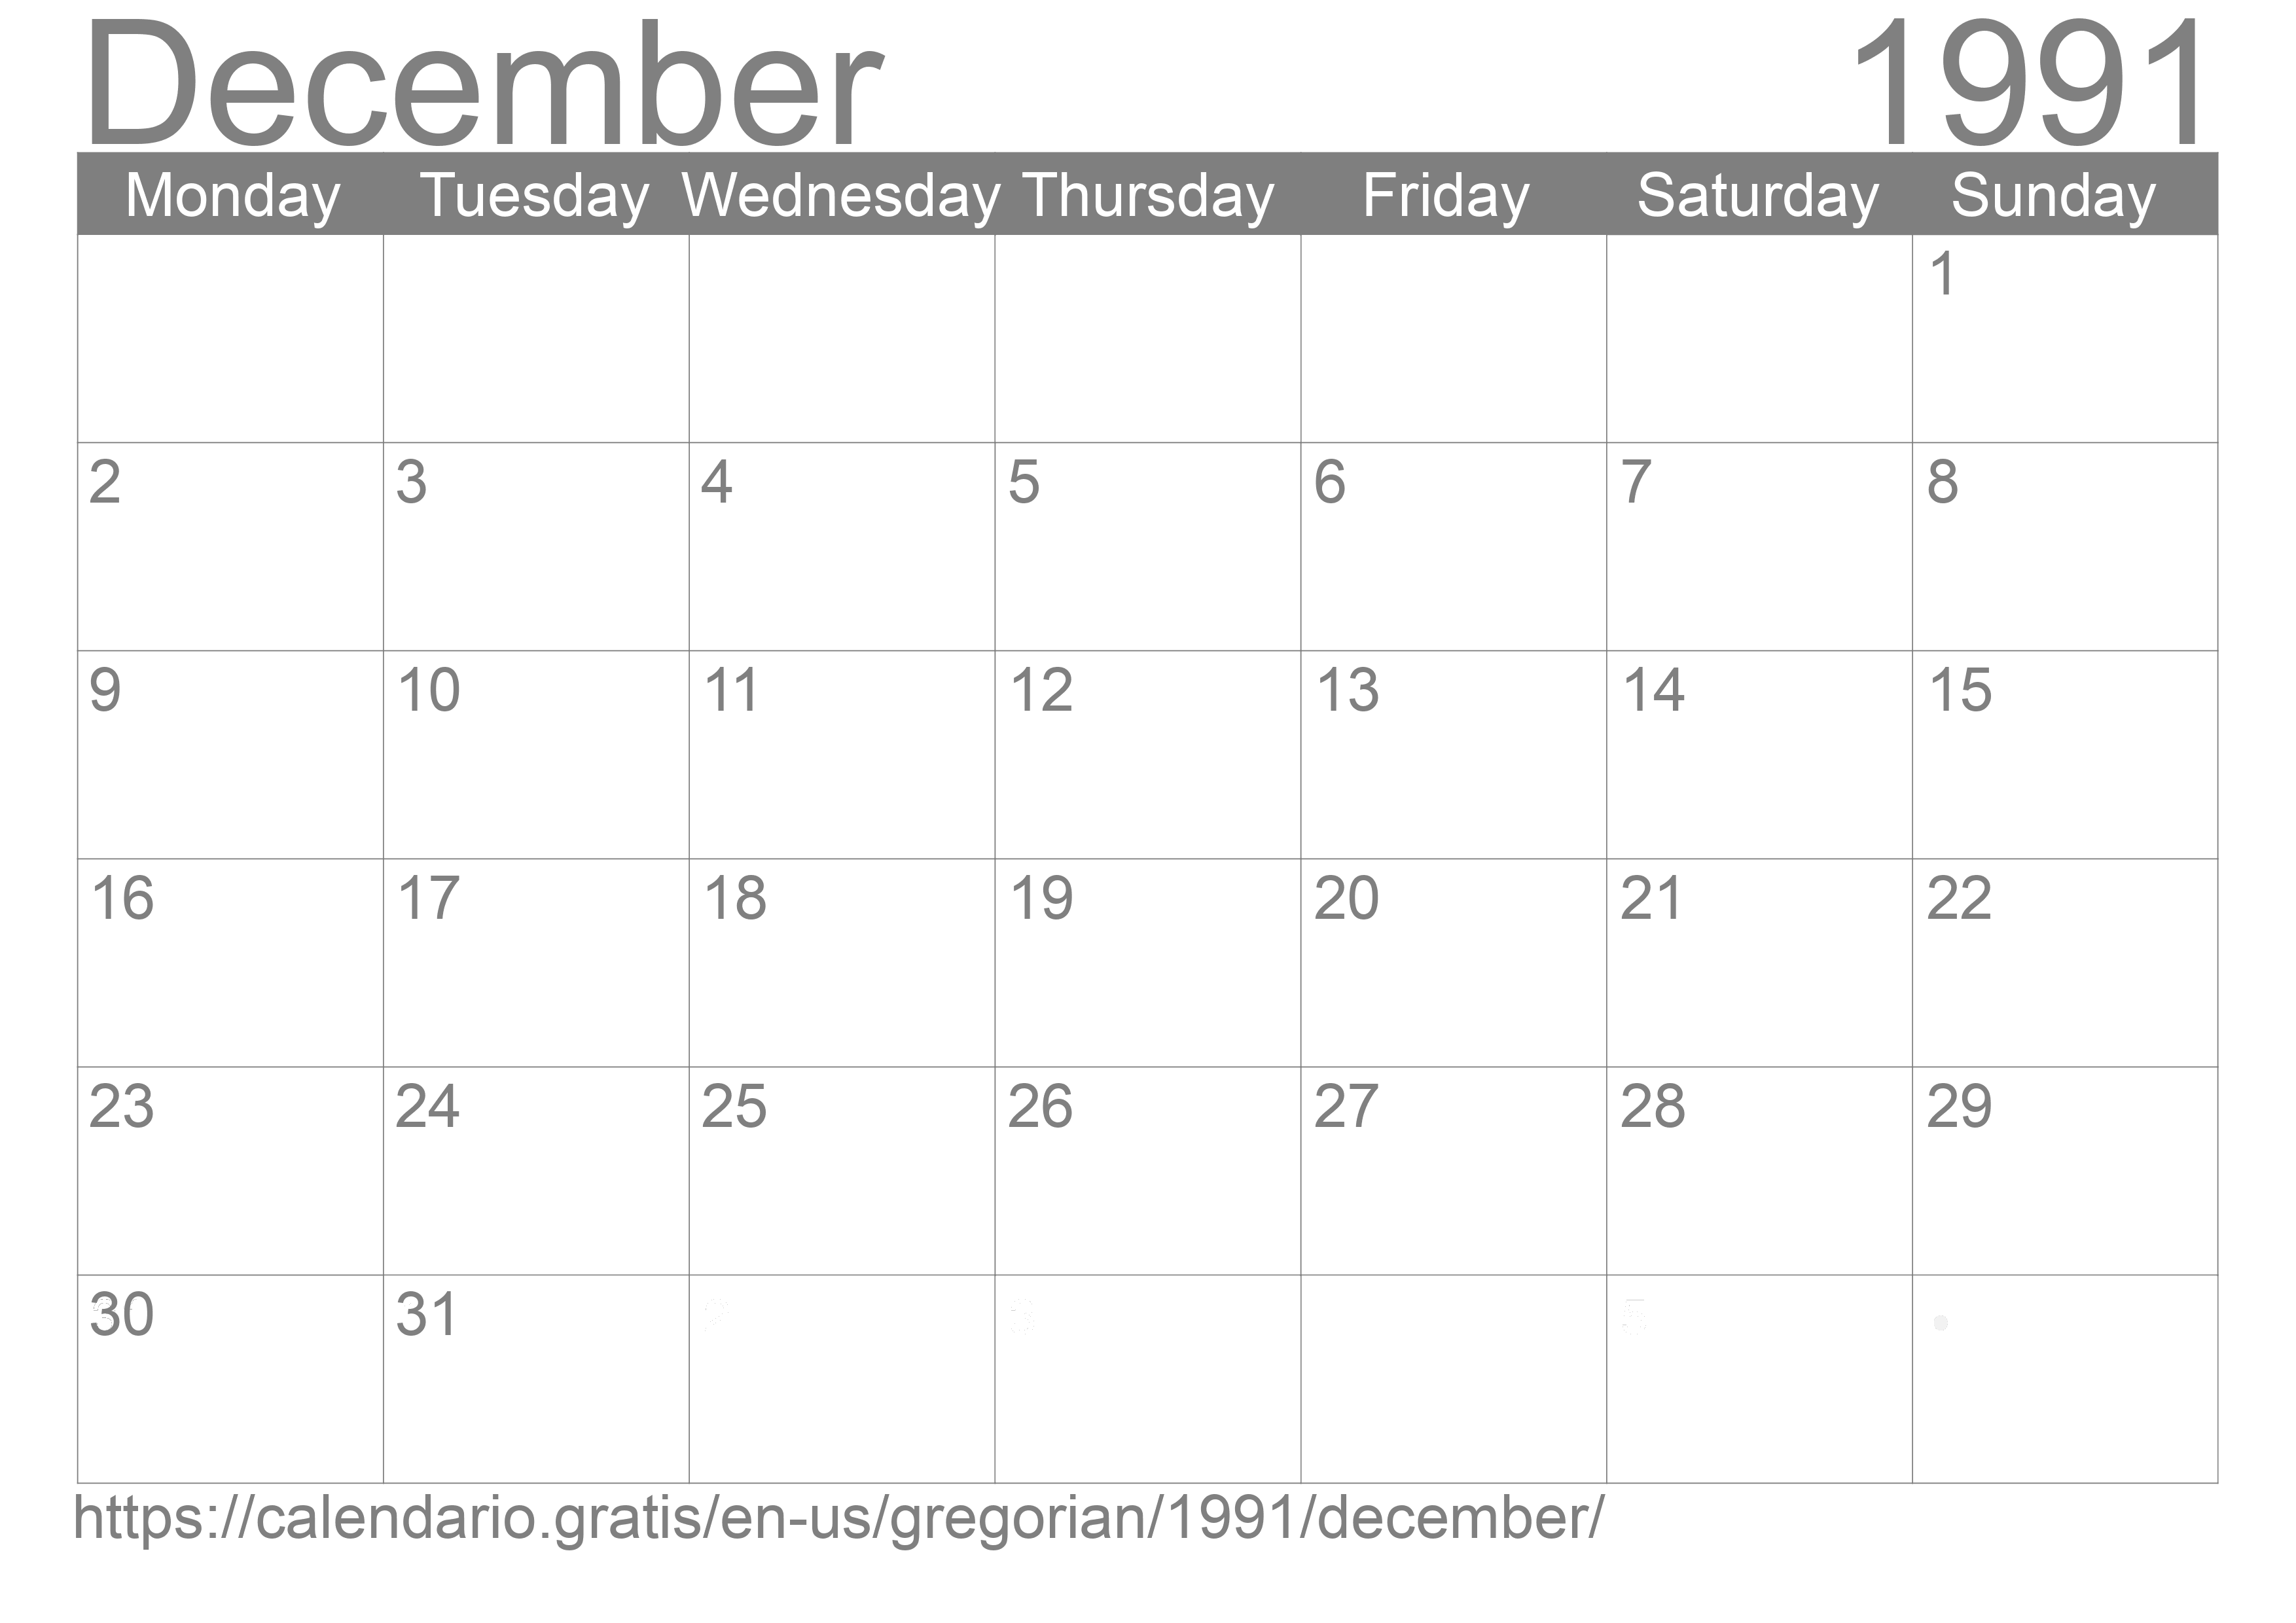 Calendar December 1991 to print